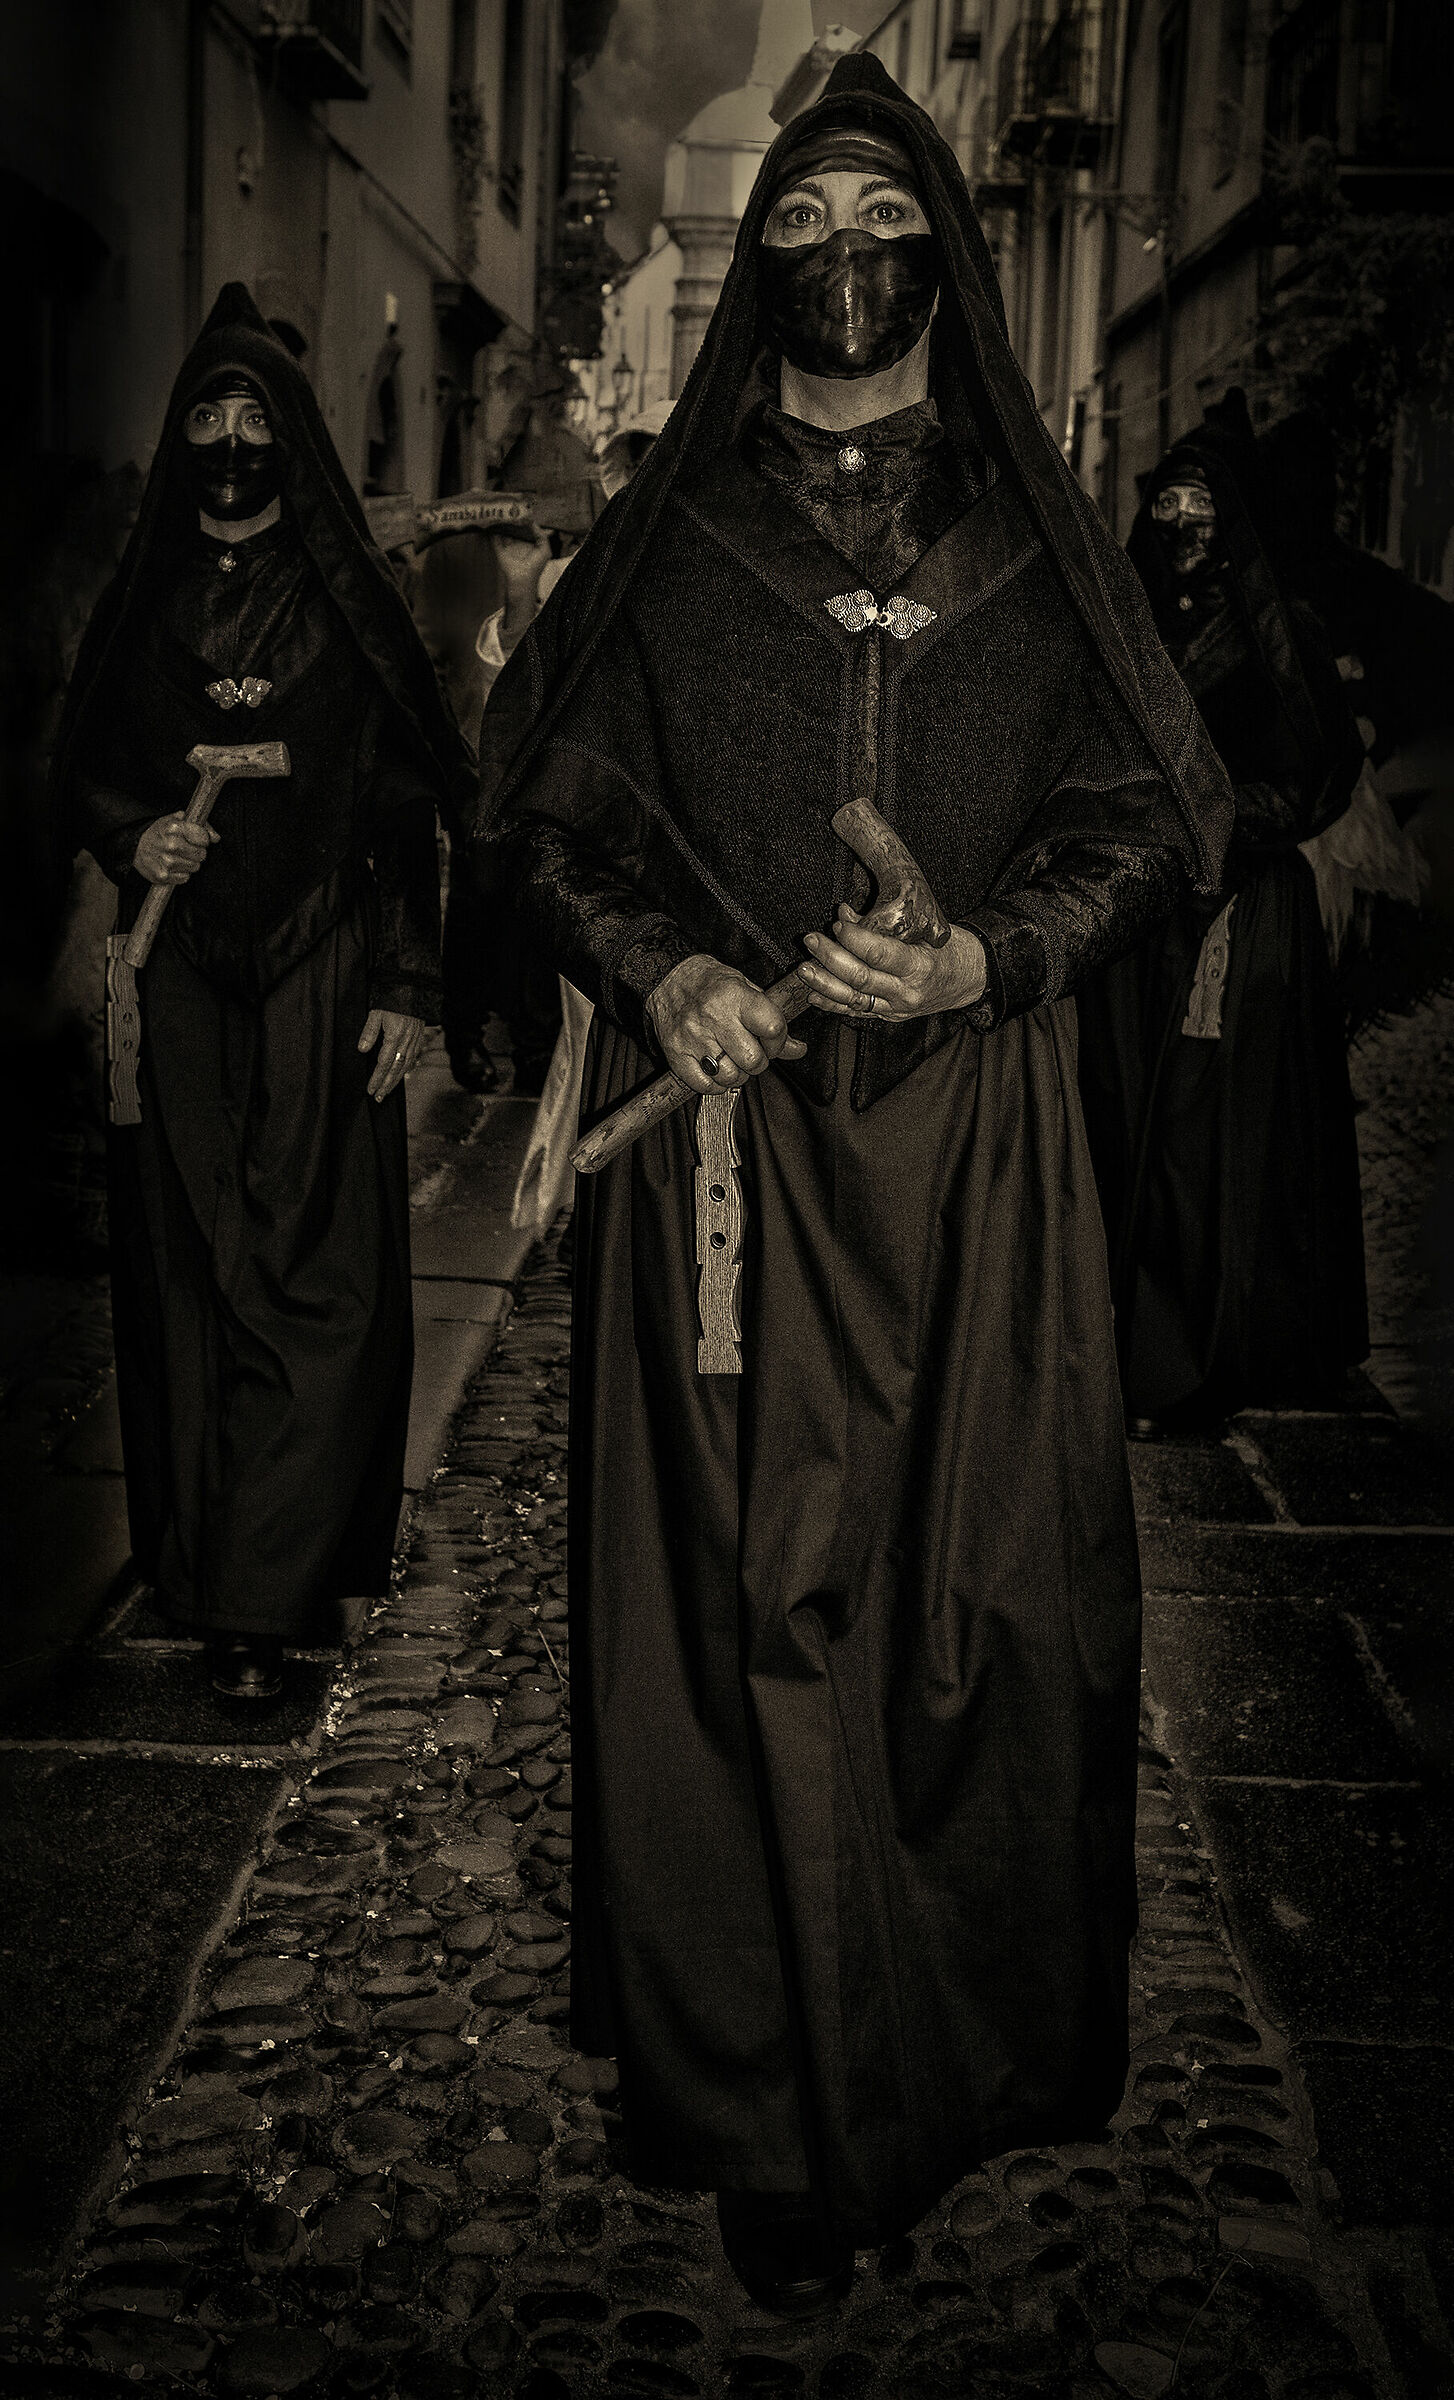 Sas Accabadoras - Le sacerdotesse della morte...